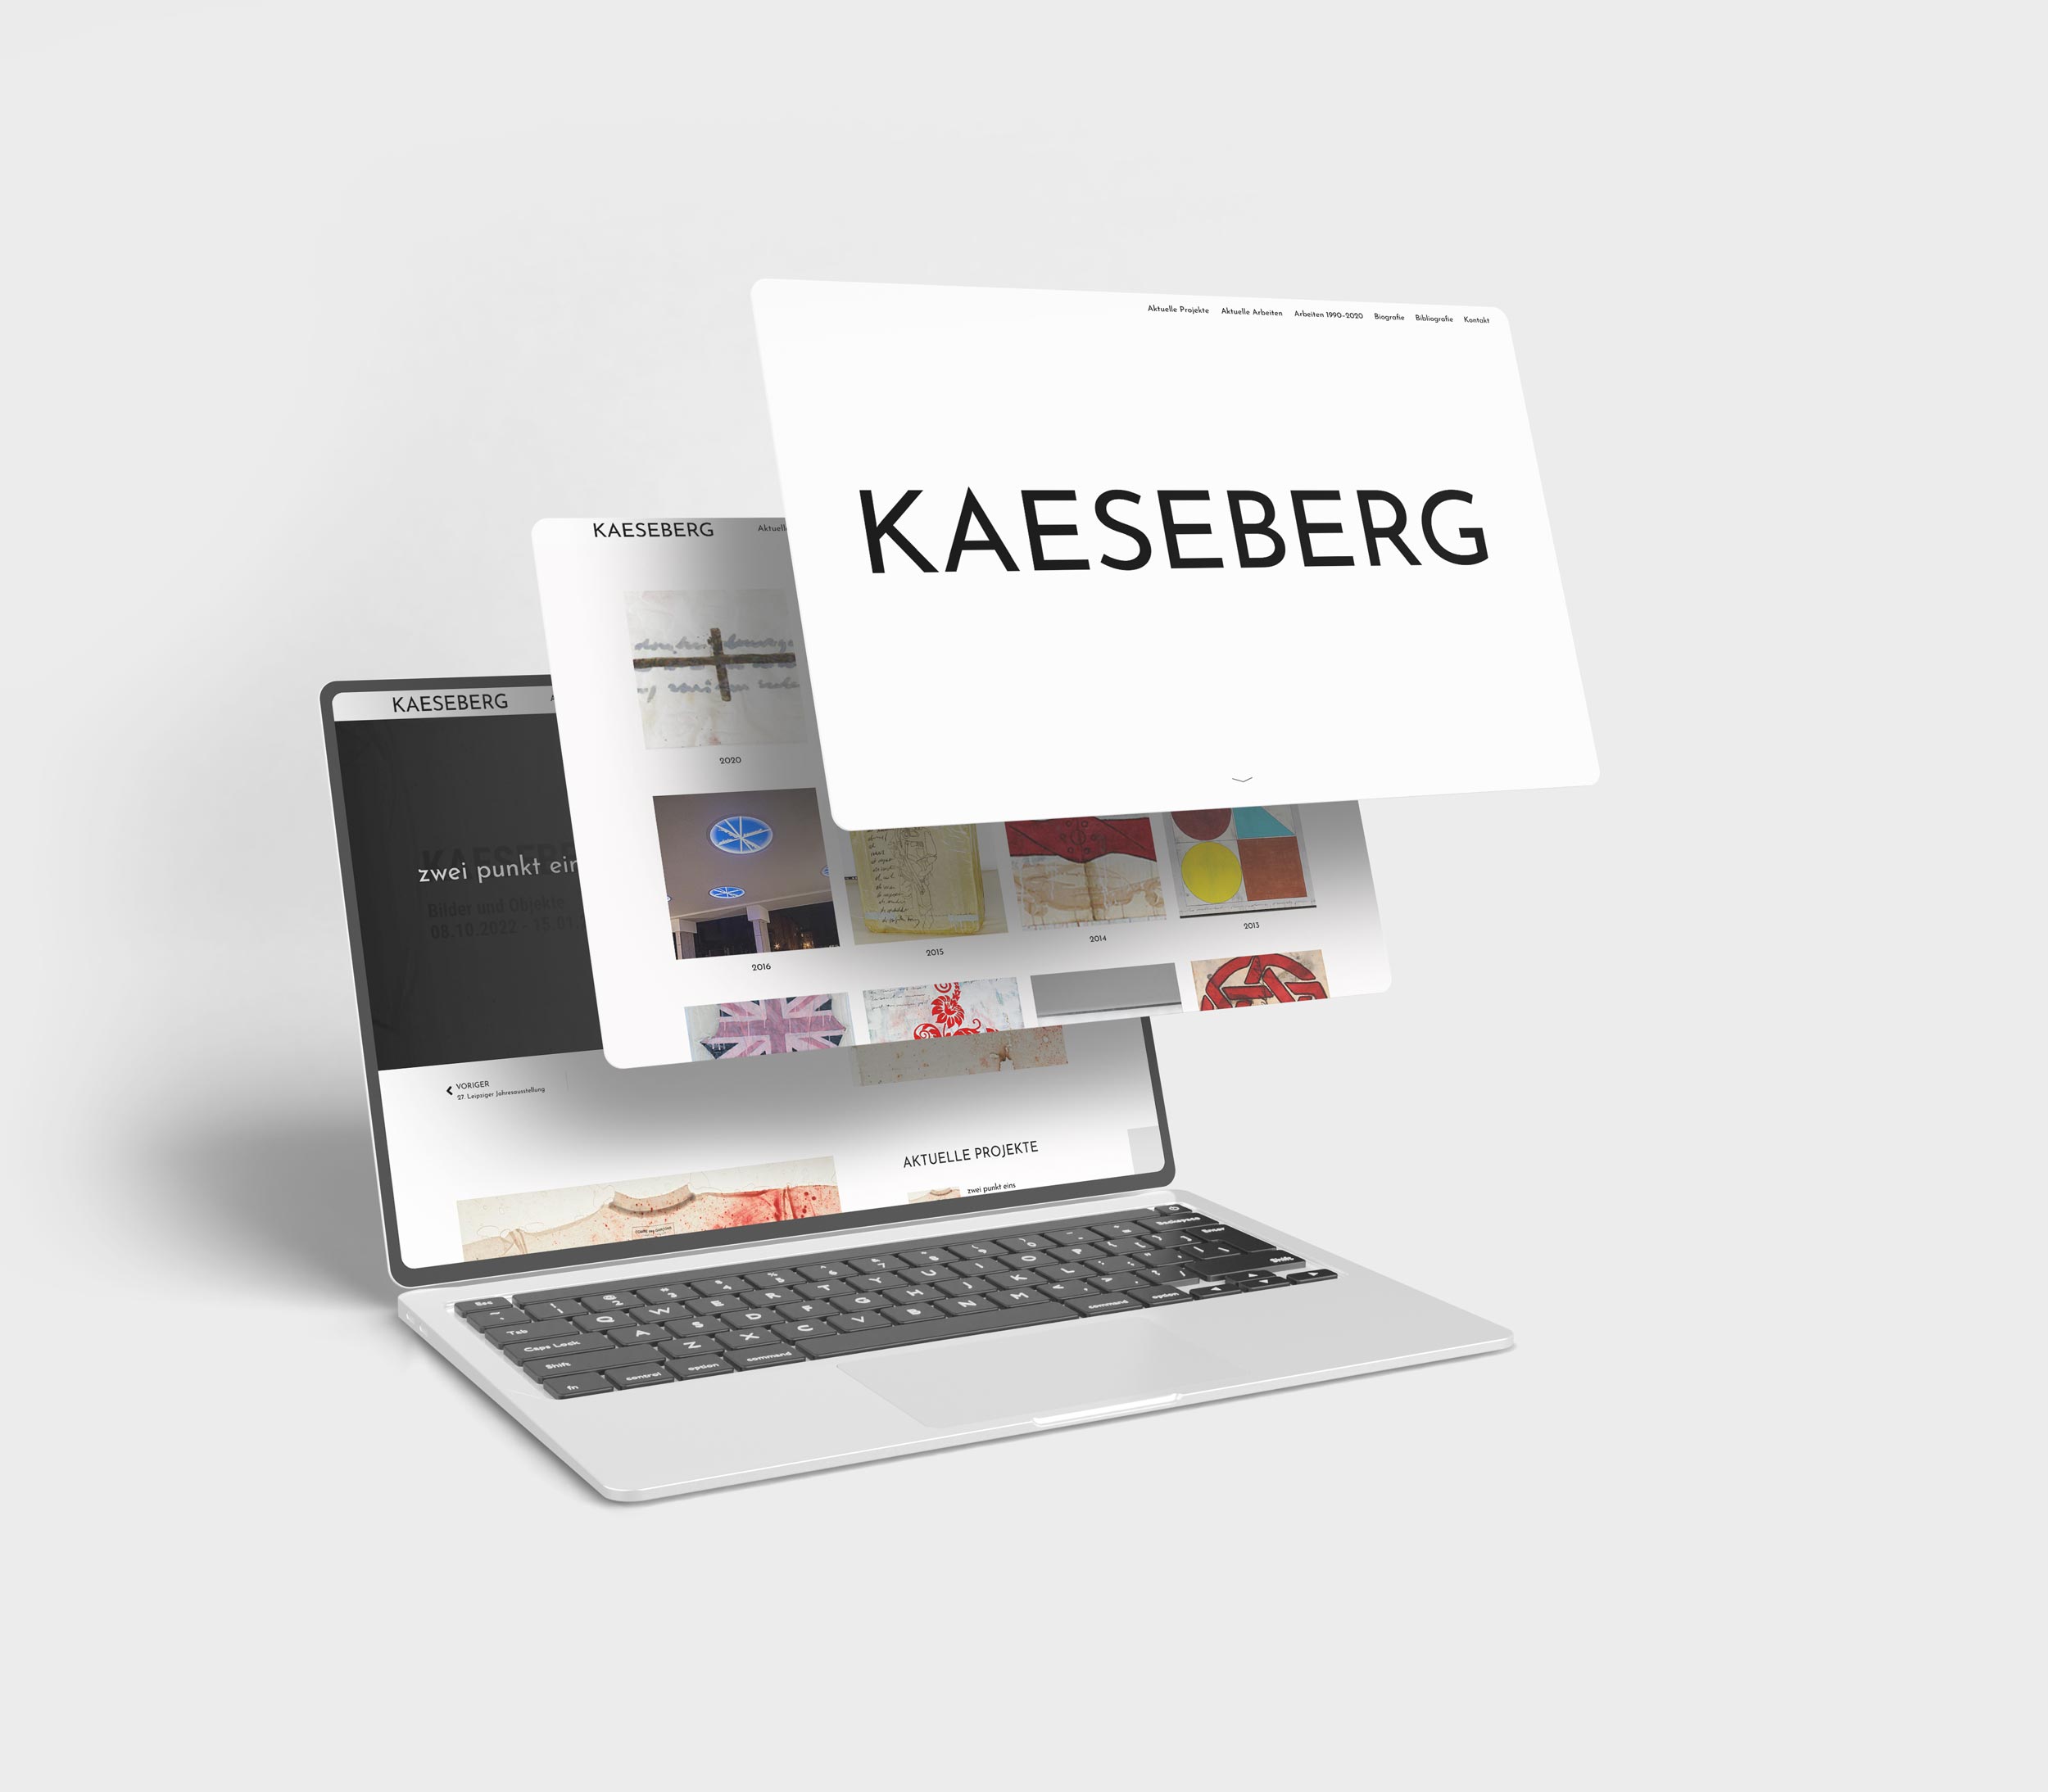 Desktopansicht der Webseite KAESEBERG